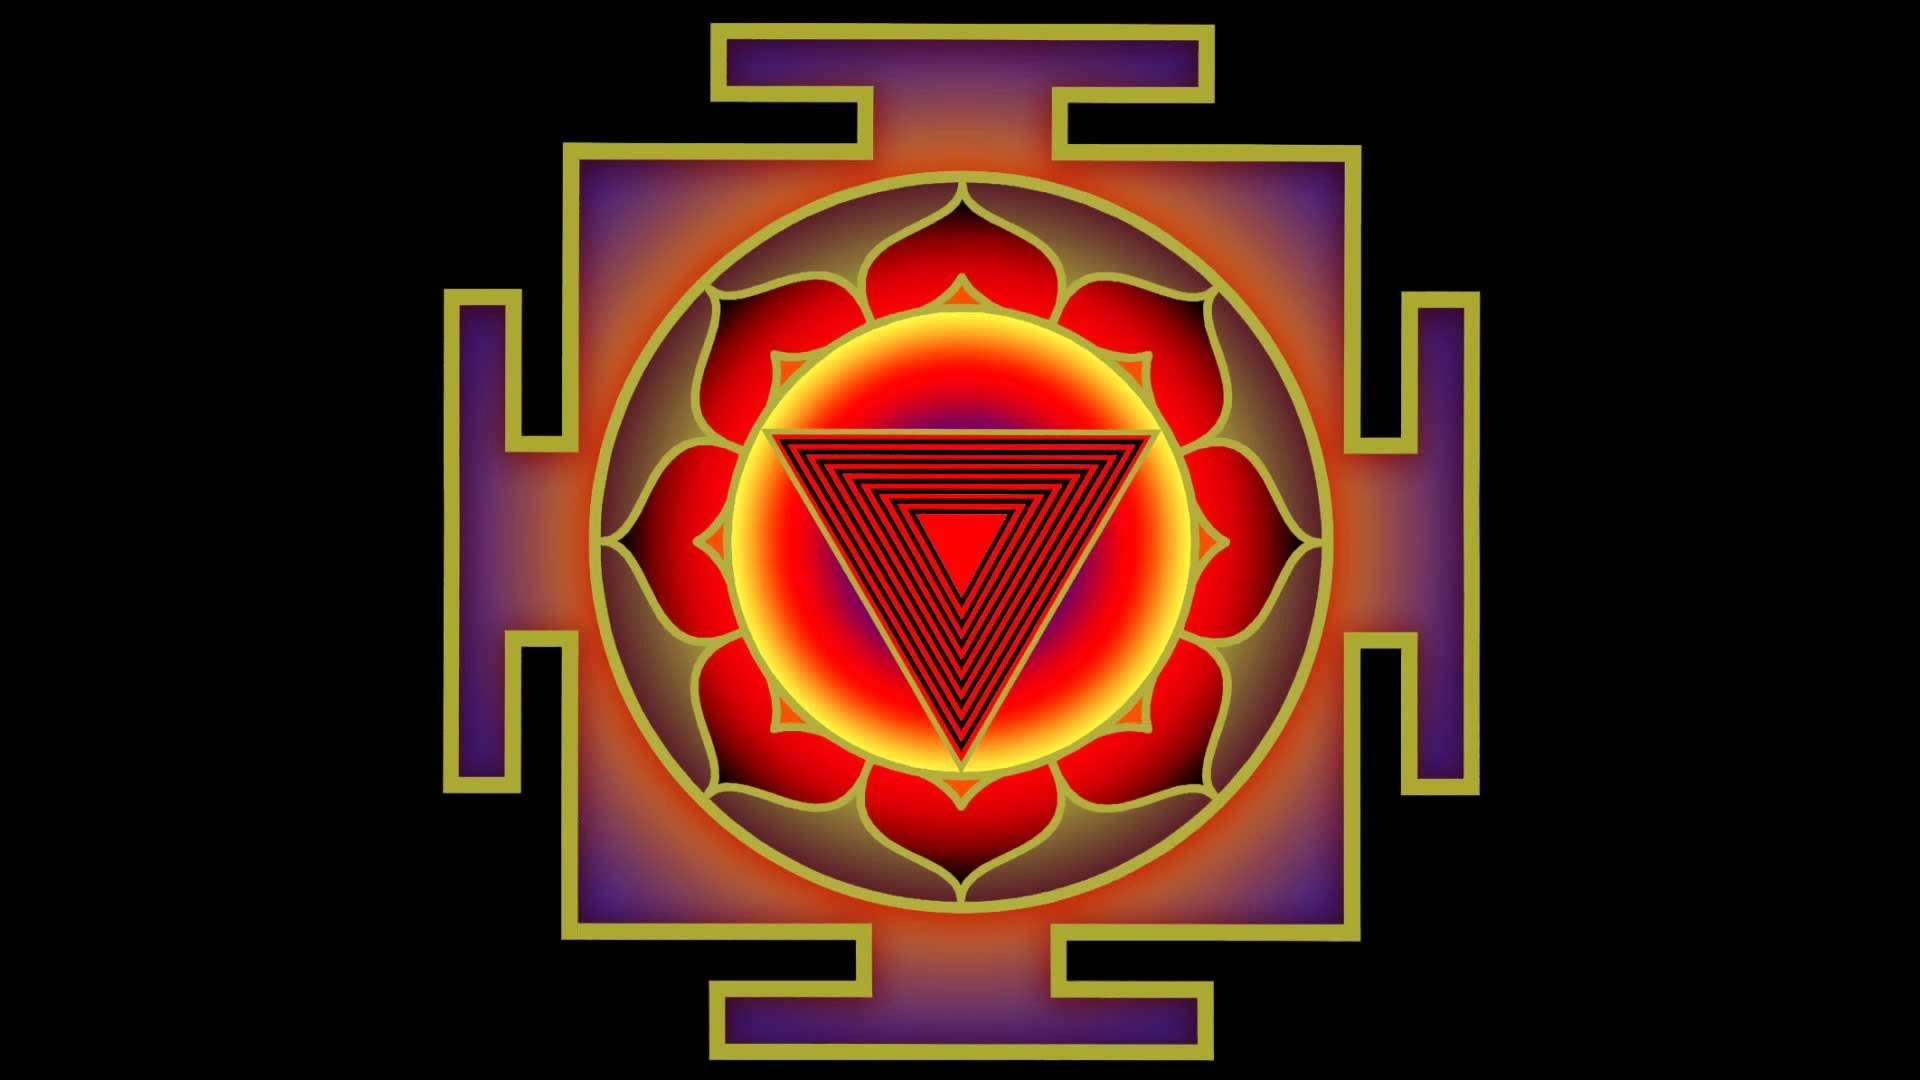 Spiritual Background for Meditation with Sri Yantra Symbol and Galaxy Stock  Illustration - Illustration of mind, masonic: 263848713